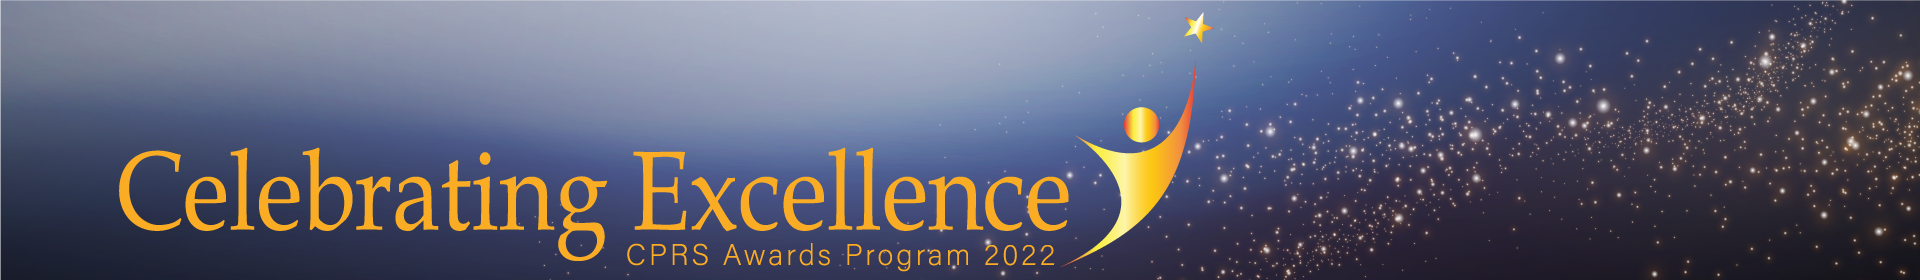 CPRS Awards Program - Celebrating Excellence